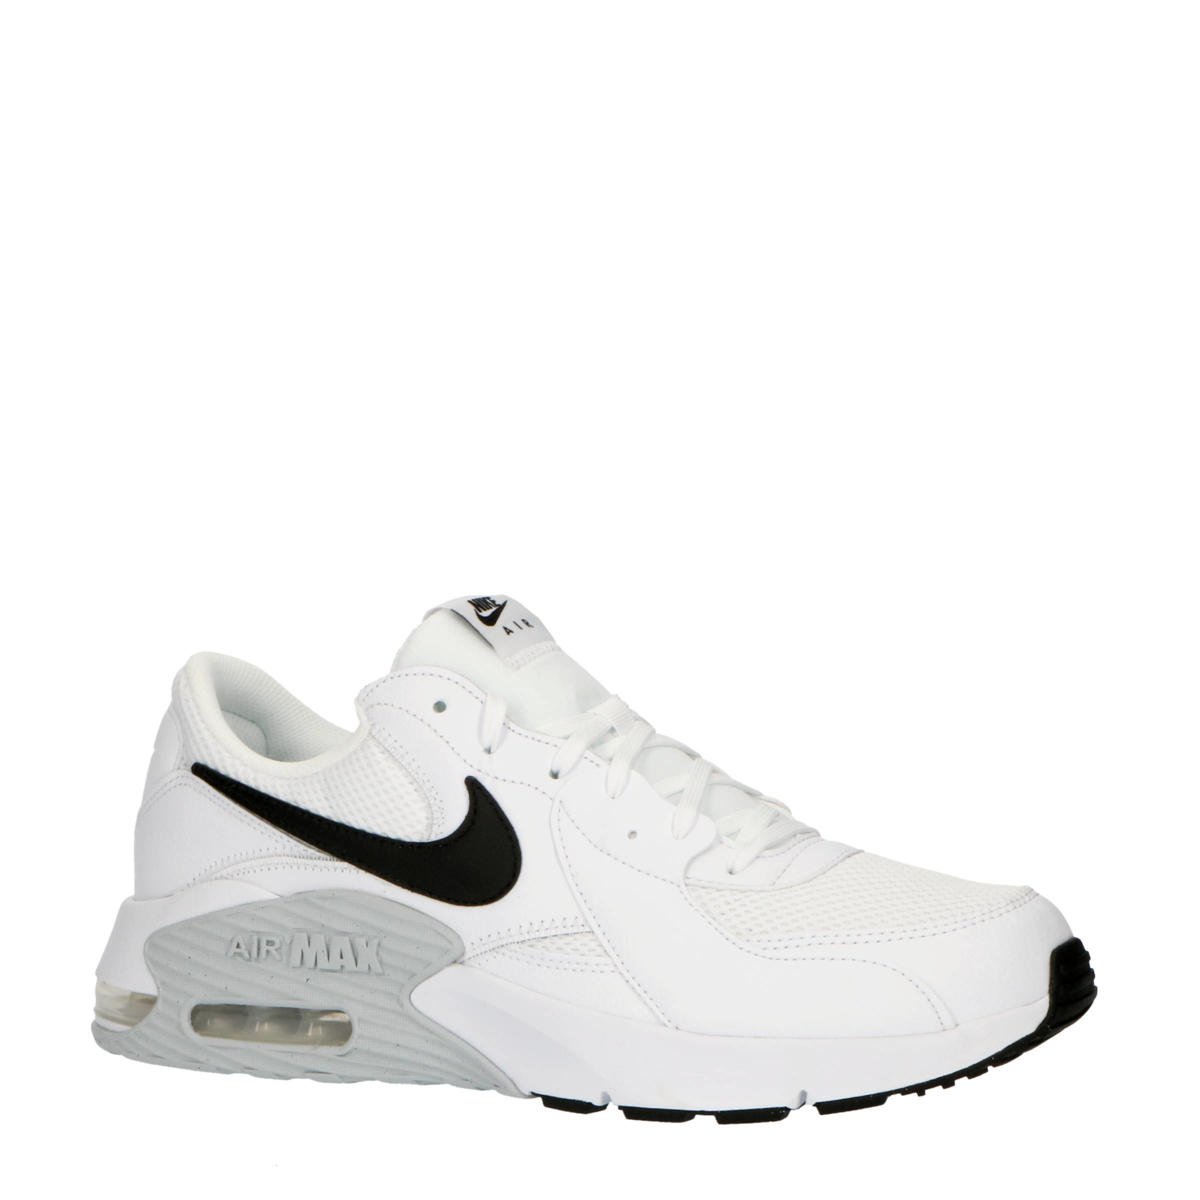 Messing Parasiet Jet Nike Air Max Excee sneakers wit/zwart/zilver | wehkamp